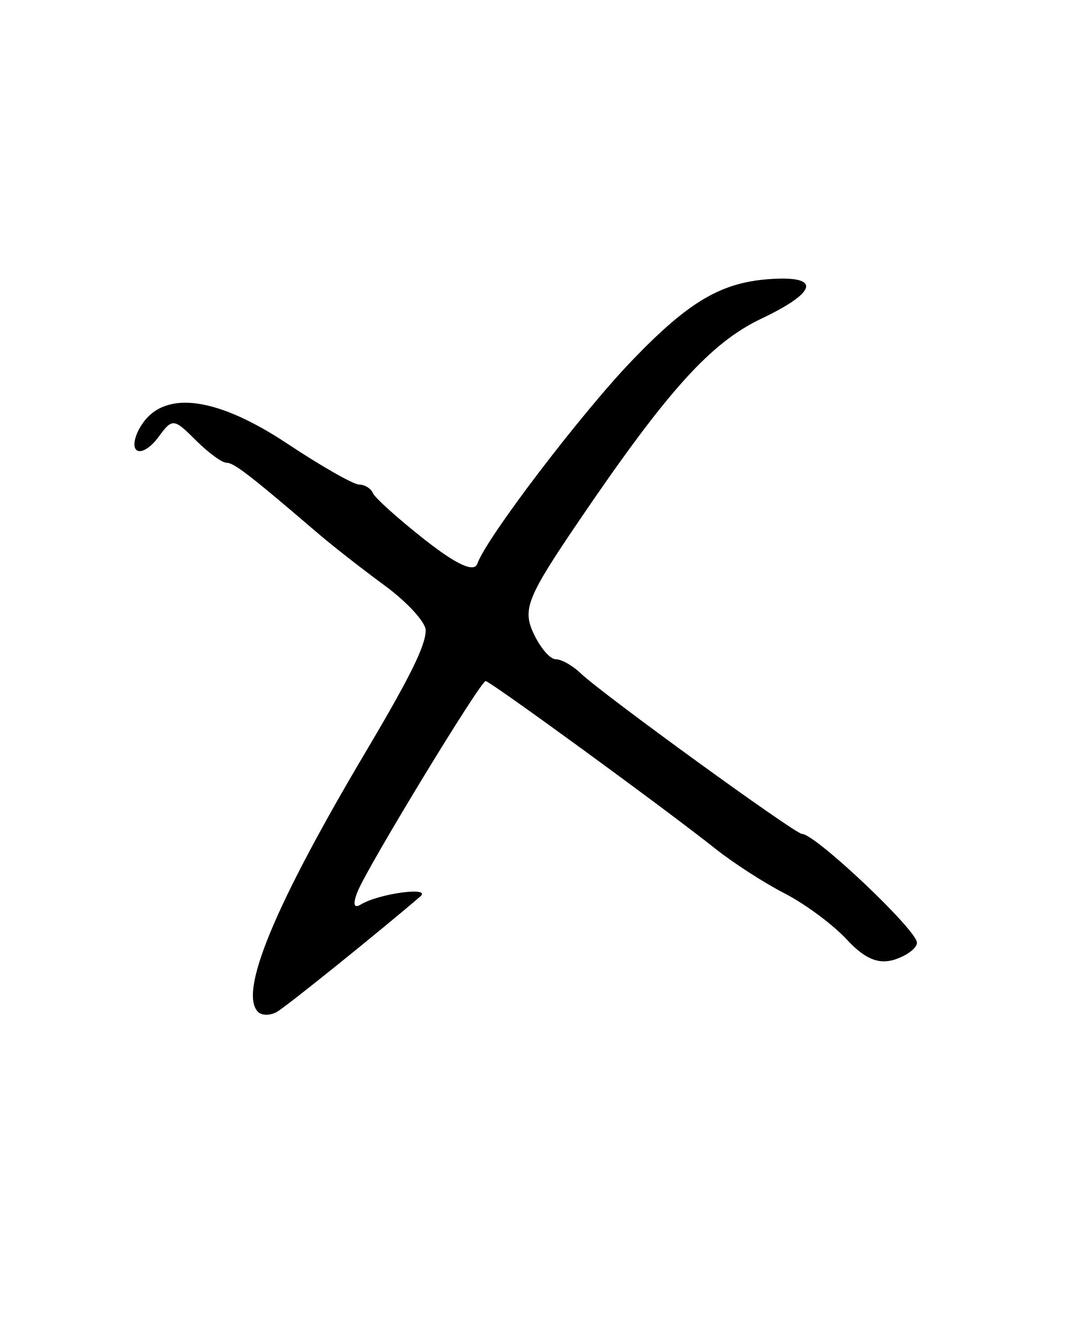 Letter X or Multiply png transparent